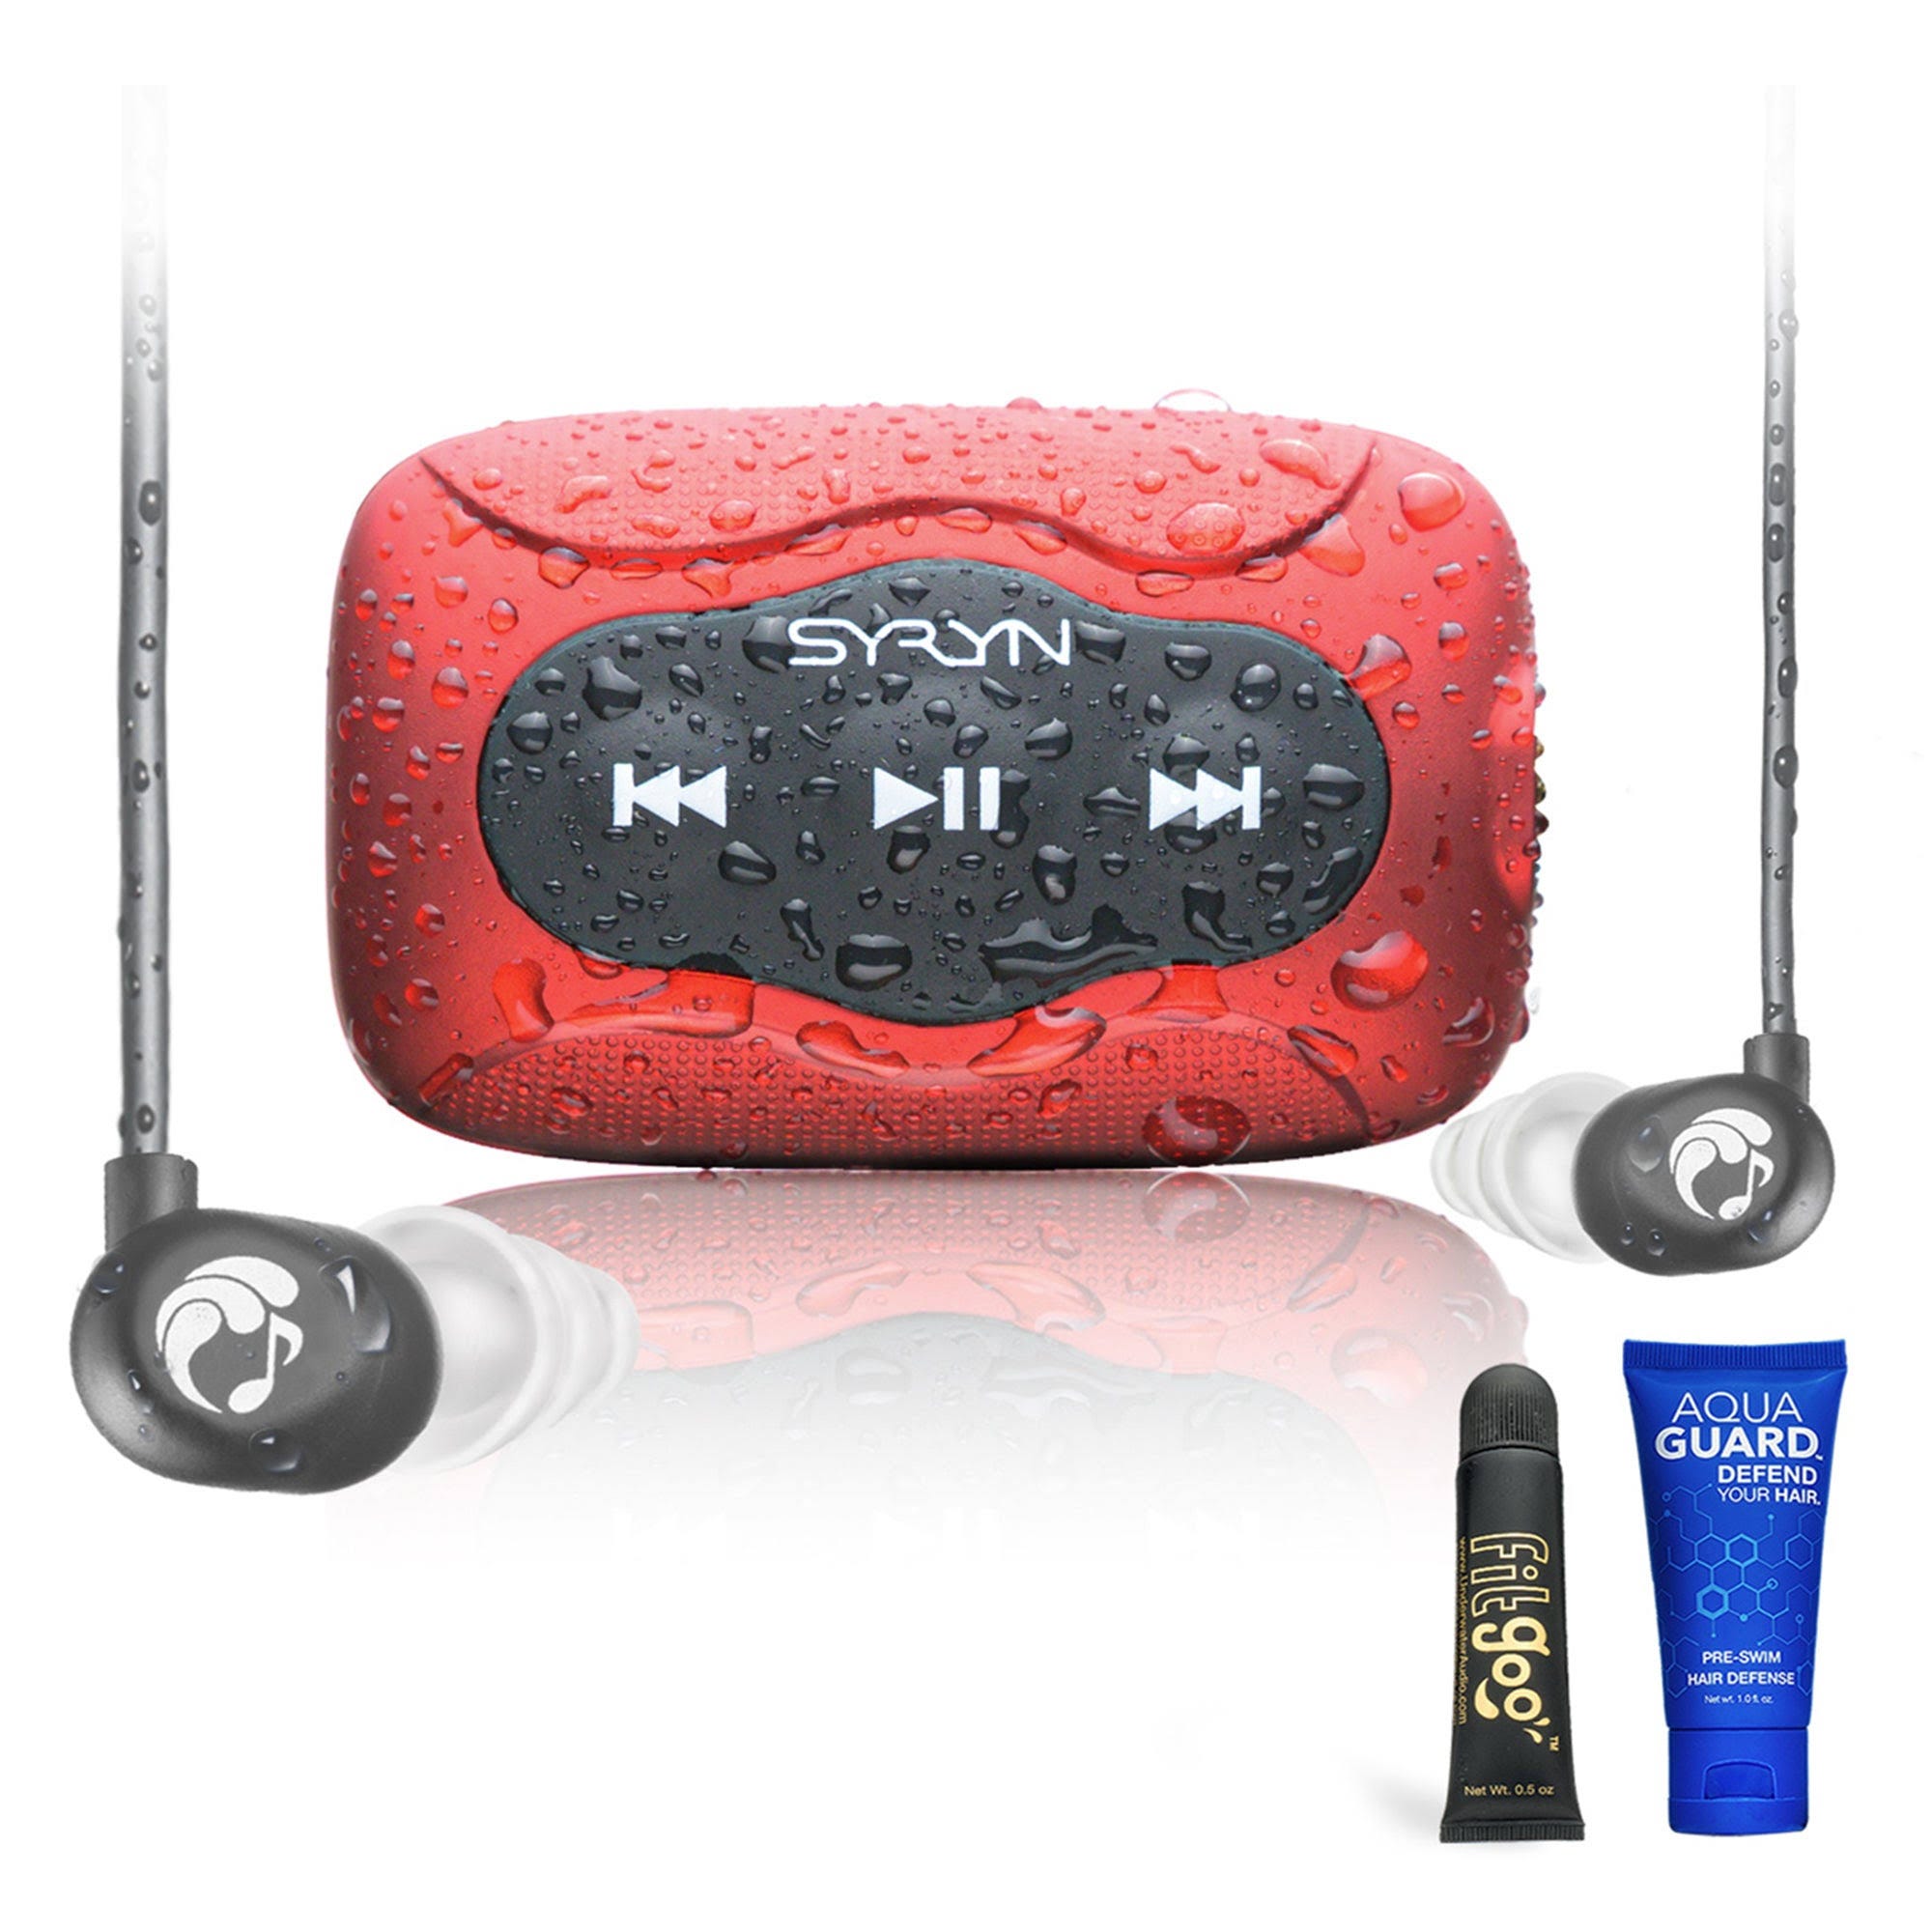 Swimbuds & SYRYN: Waterproof Headphones & MP3 Player for Aquatic Adventures | Image